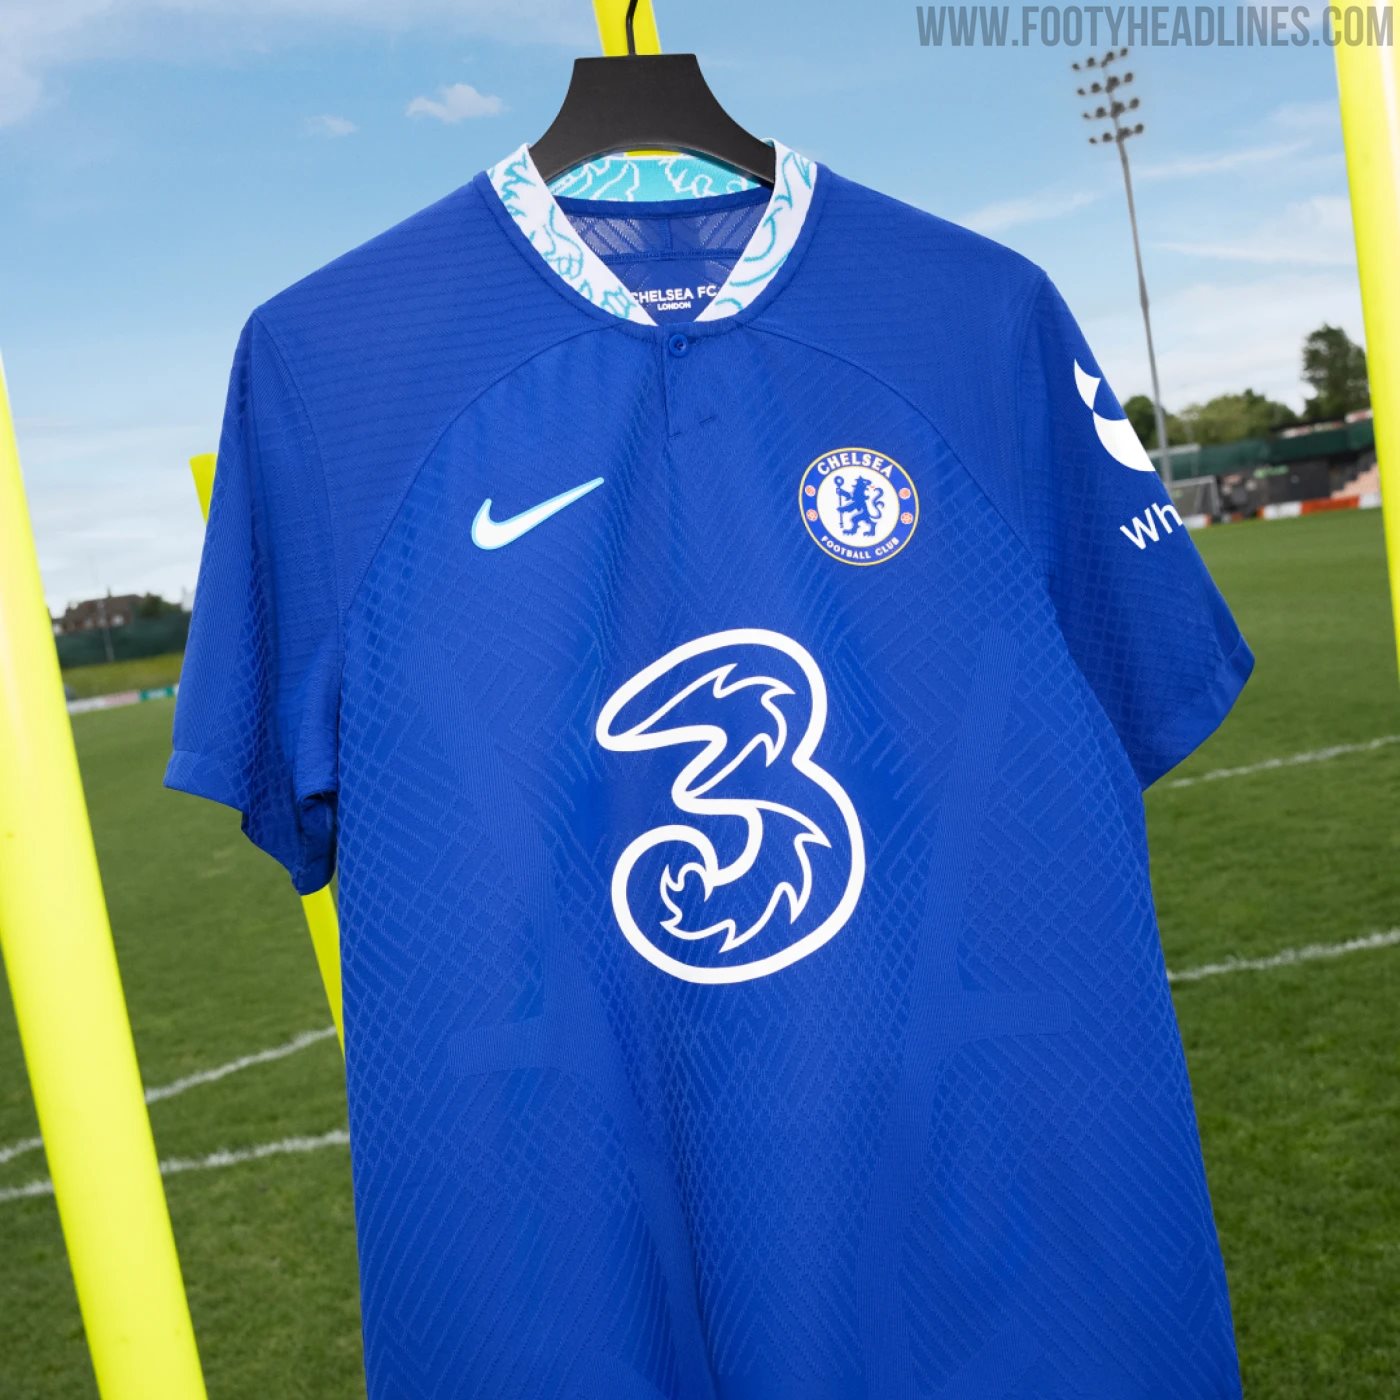 Loving Chelsea 22-23 Home Kit Released - Footy Headlines